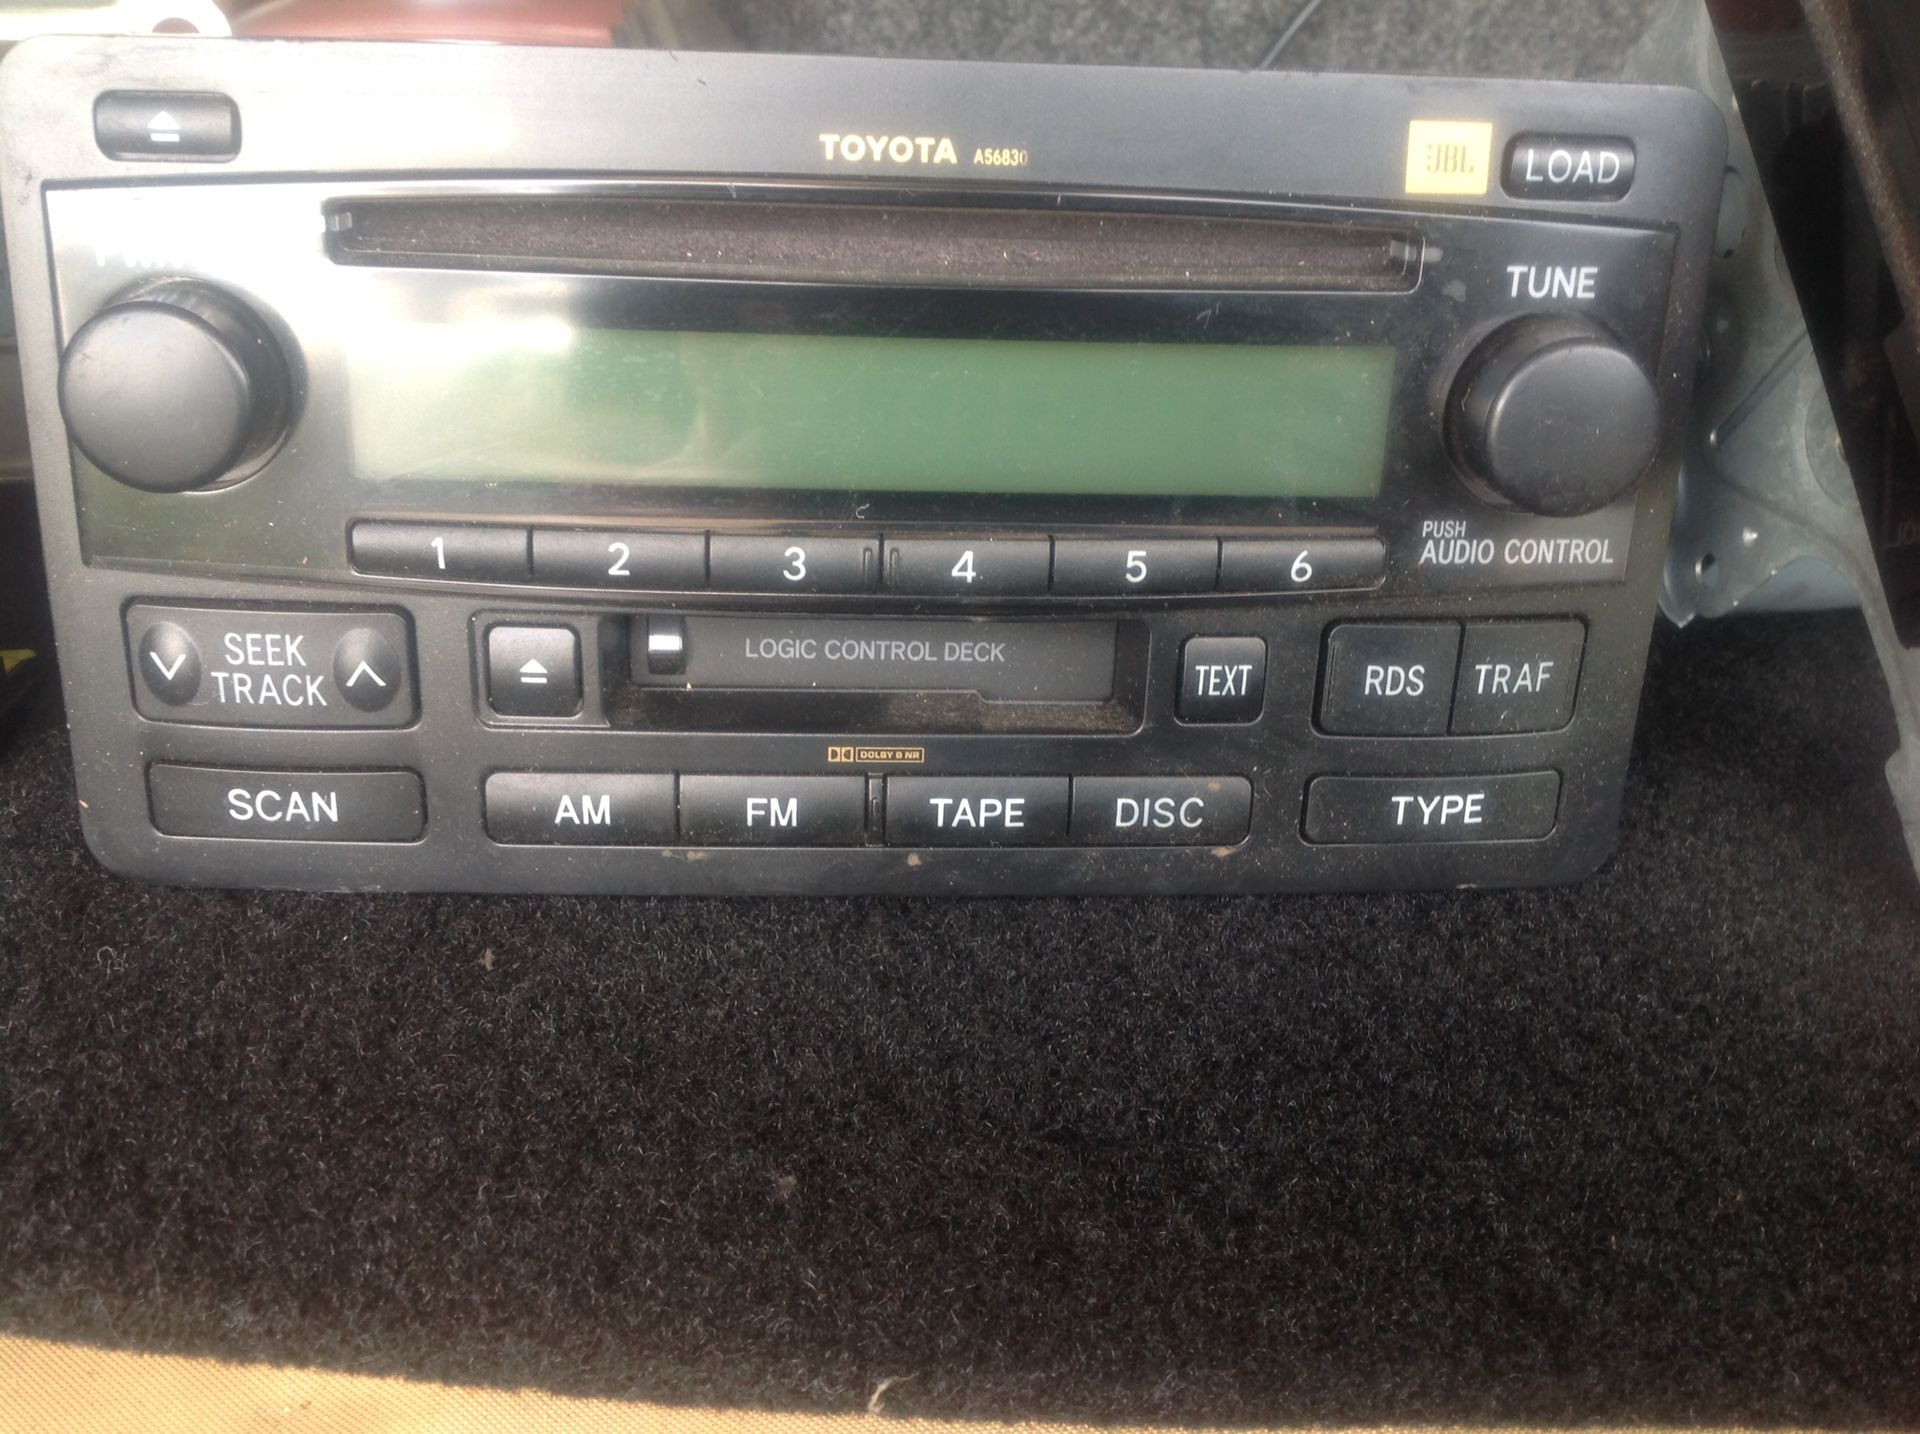 Toyota CD Player